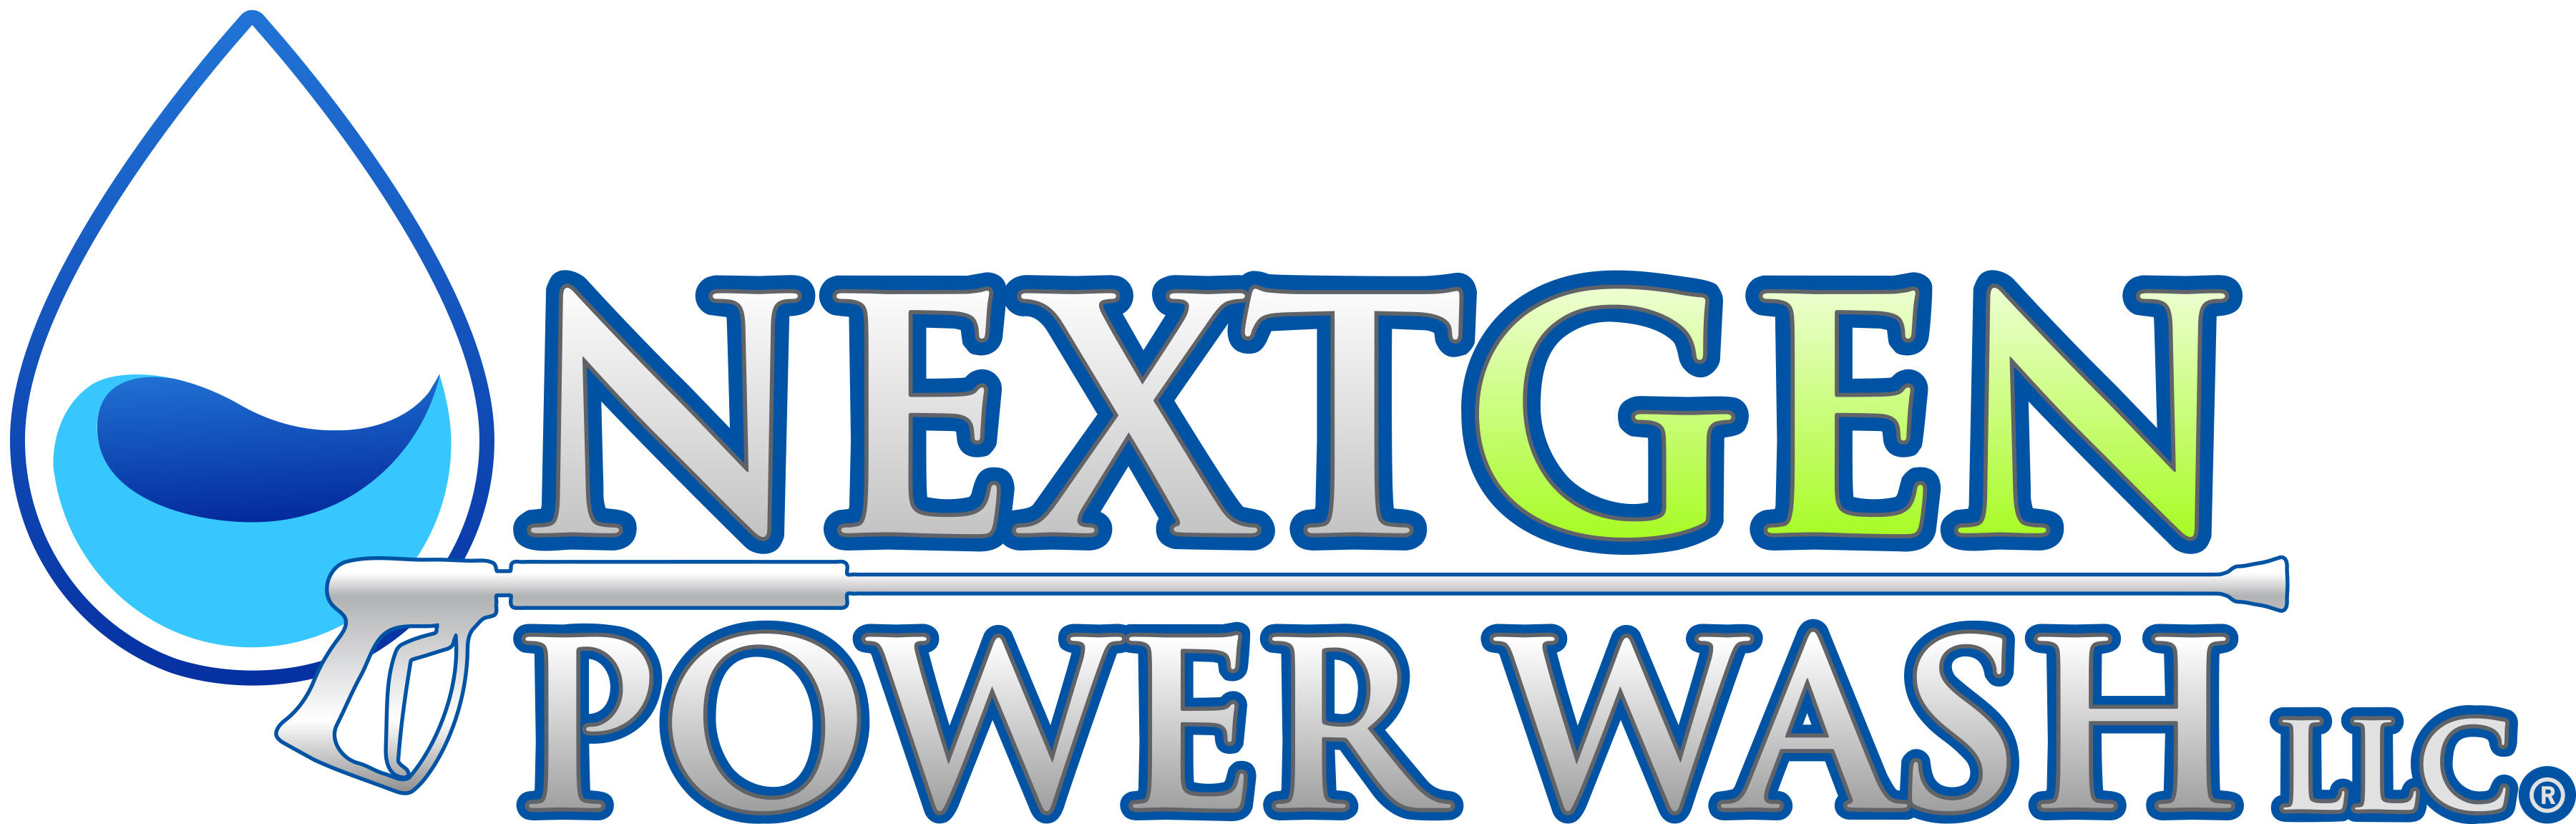 NextGen Power Wash LLC Logo Elysburg Pennsylvania